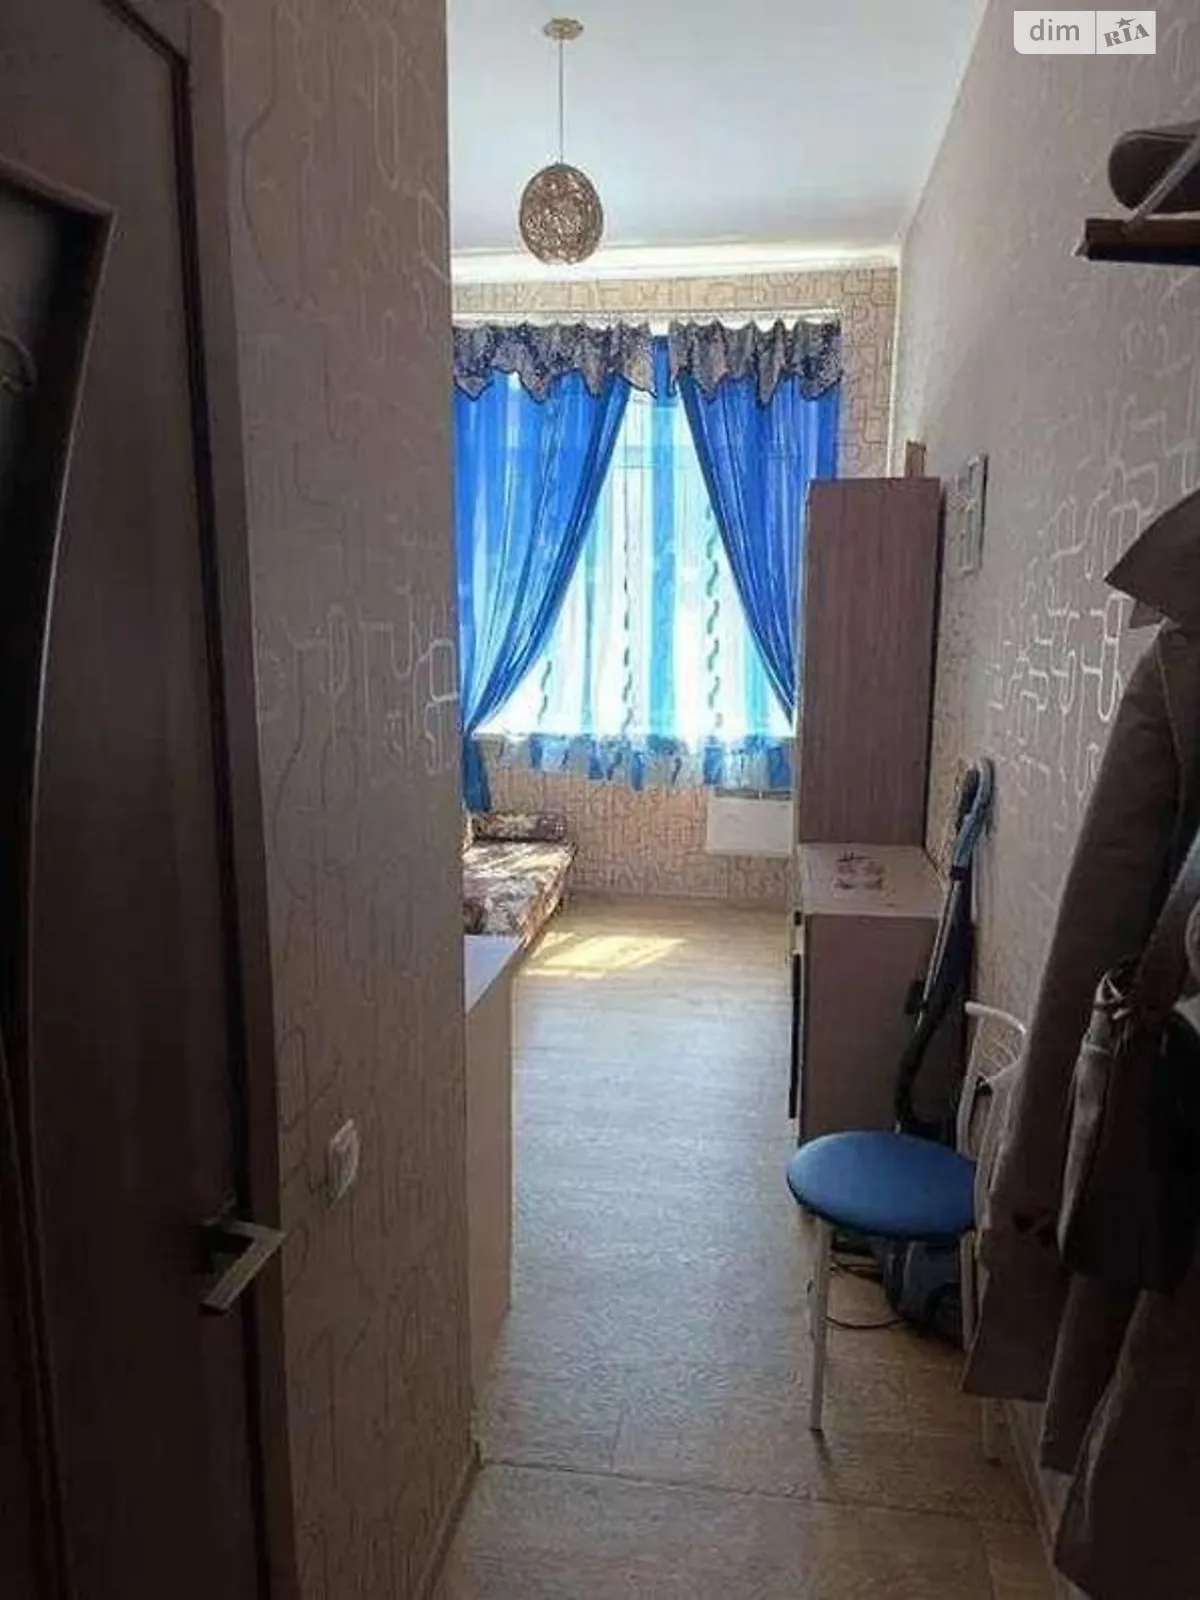 Продается комната 18 кв. м в Харькове - фото 3